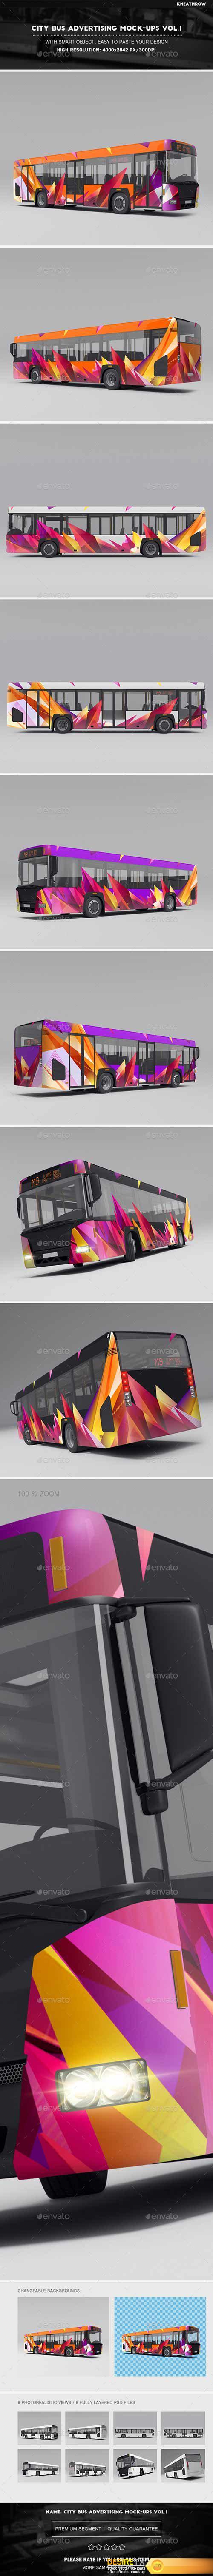 Graphicriver - City Bus Advertising Mock-Ups Vol.1 20730427